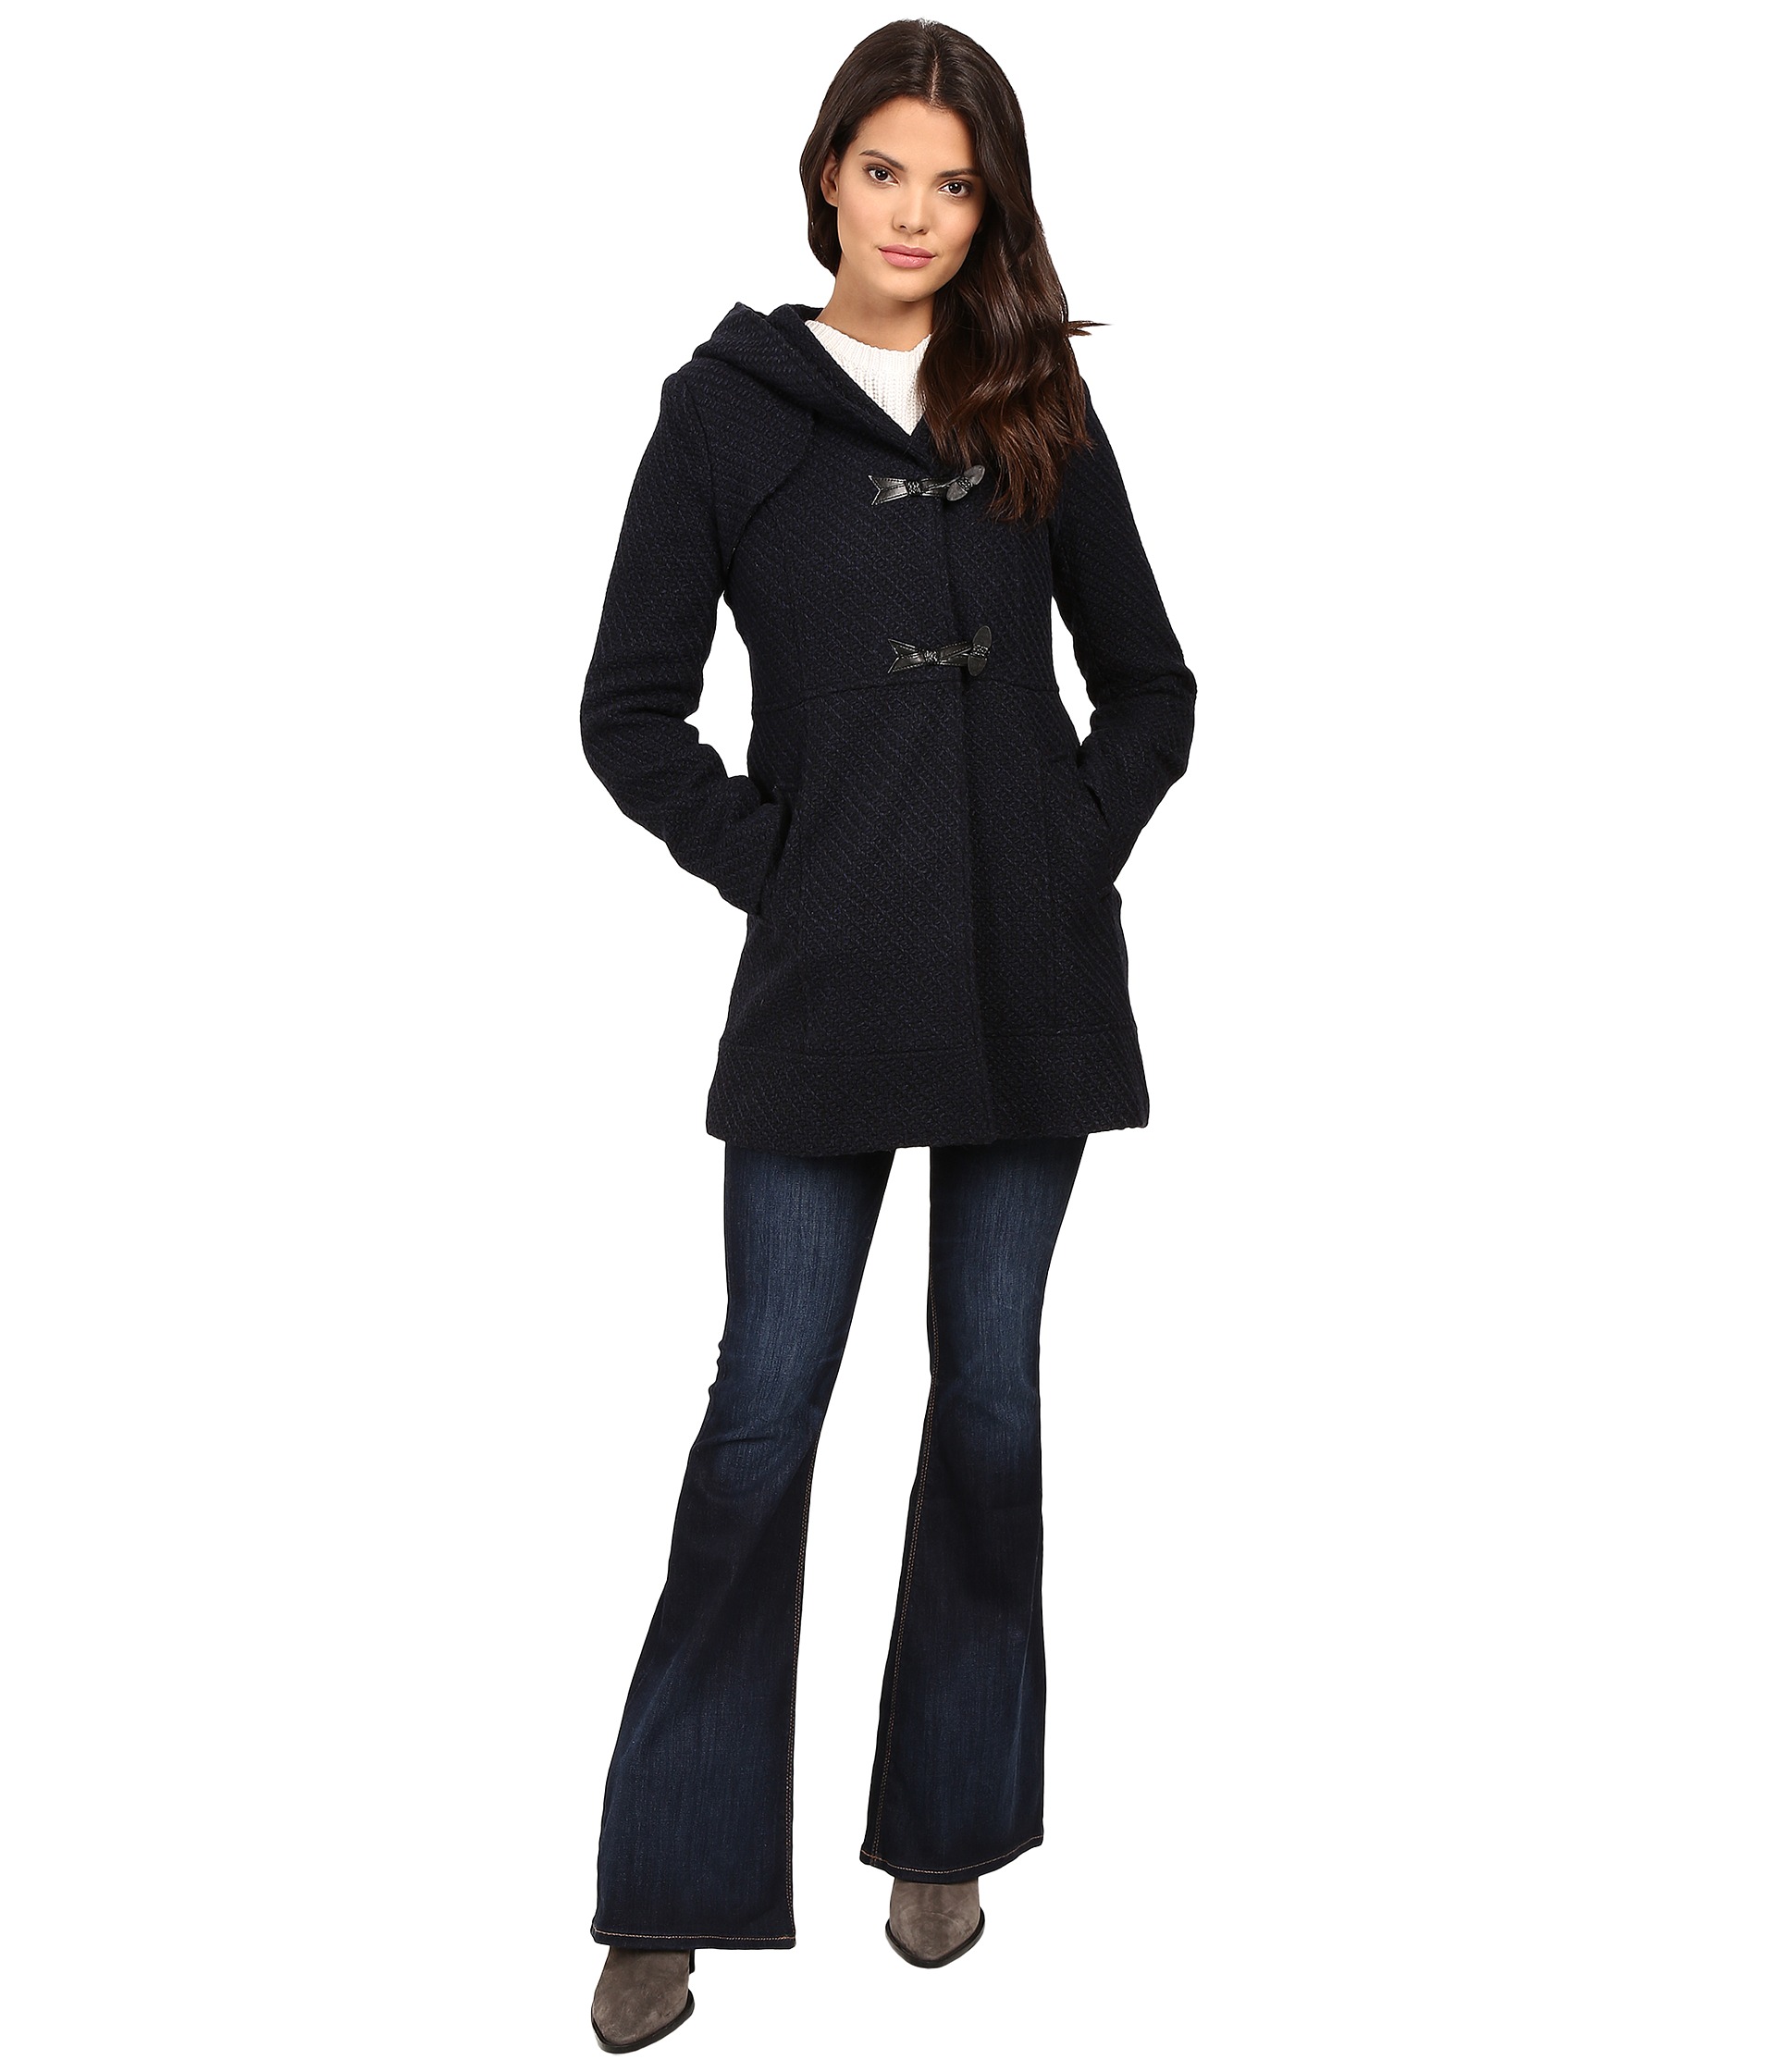 Coats & Outerwear Pea Coats | Shipped Free at Zappos